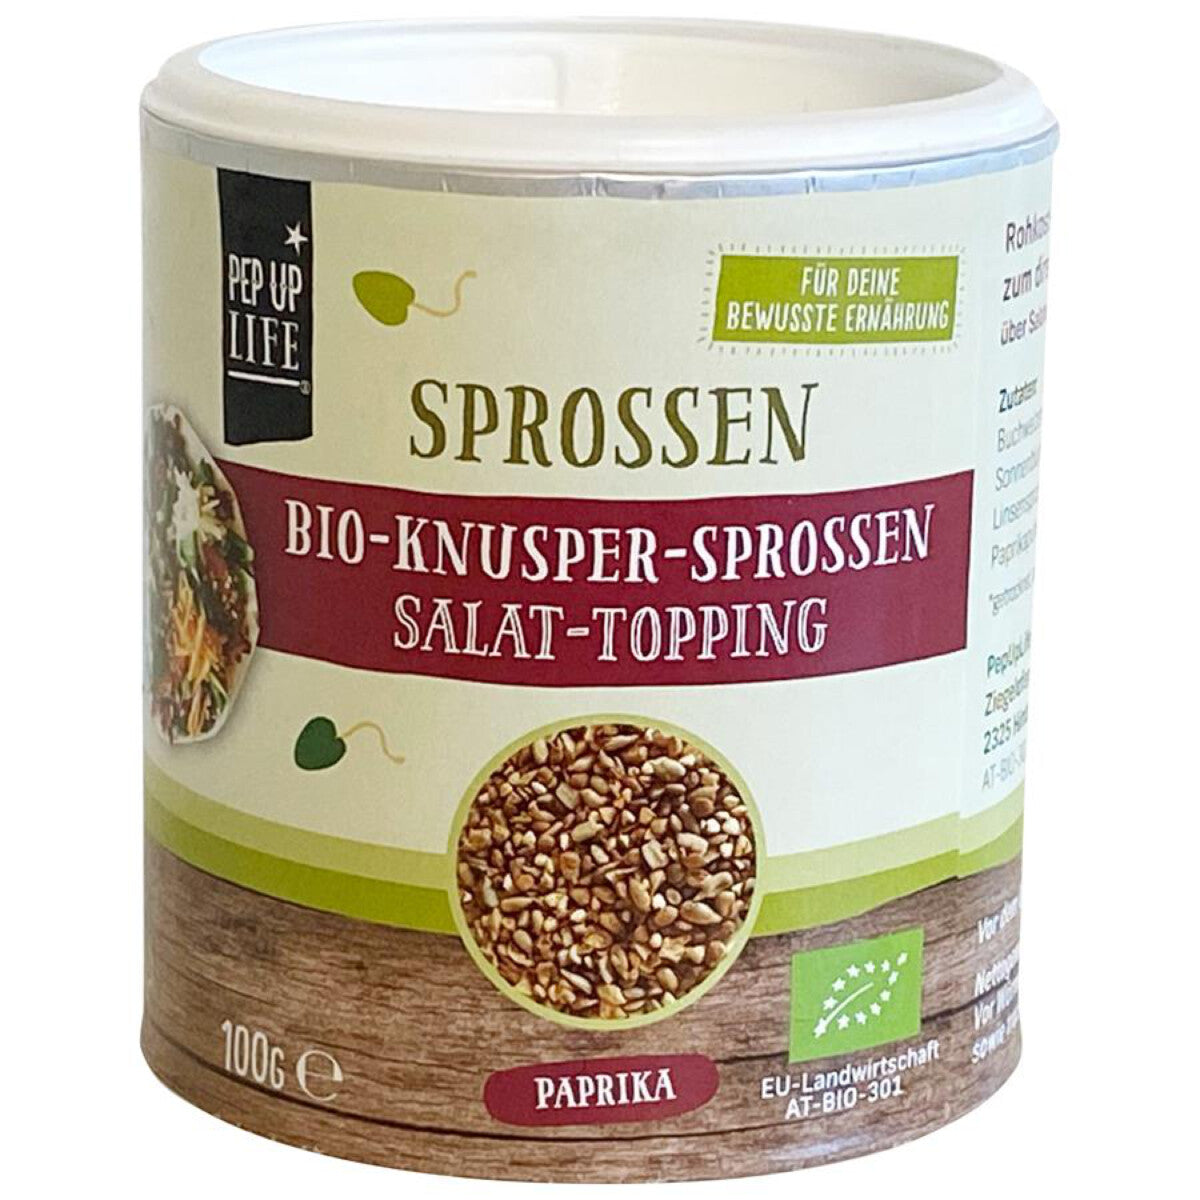 PEP UP LIFE Knusper Sprossen Paprika - 100 g